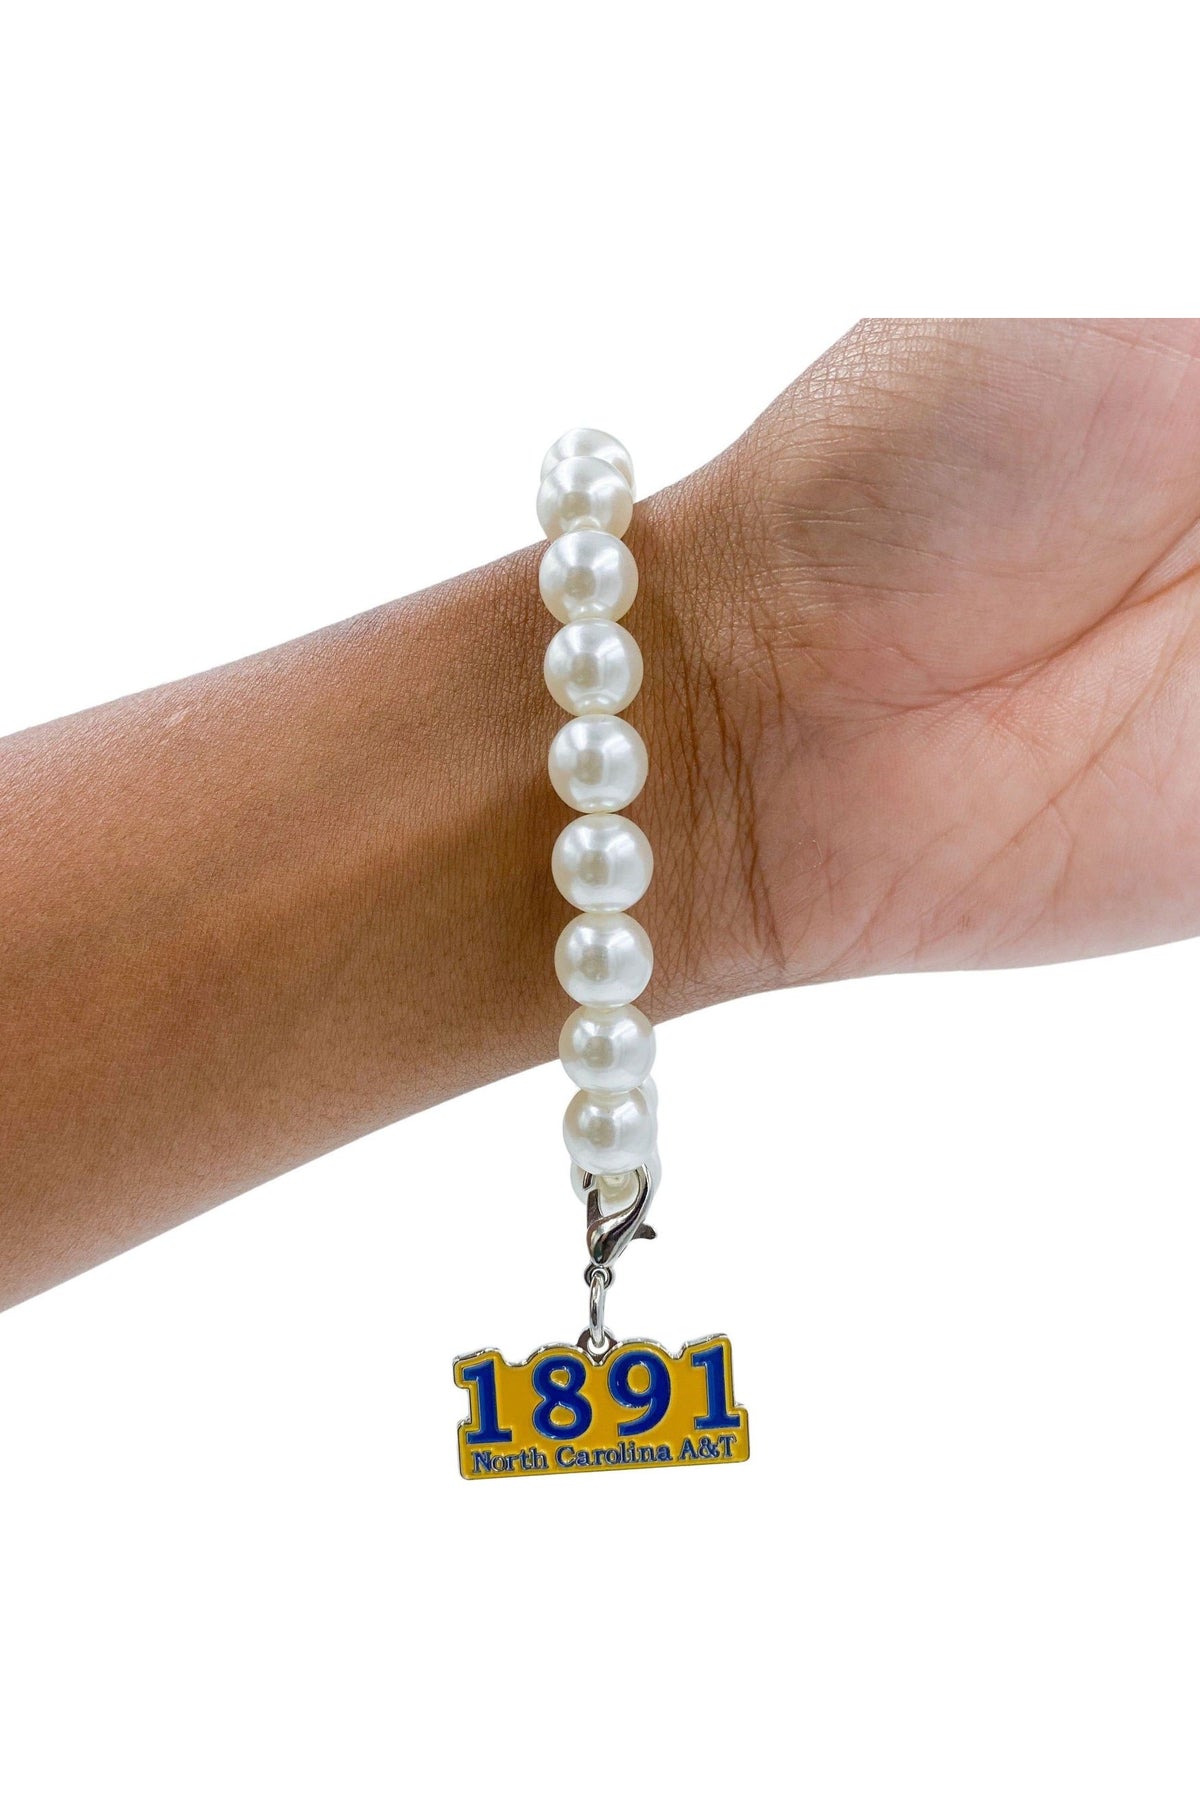 1891 North Carolina A&T Pearl Bracelet